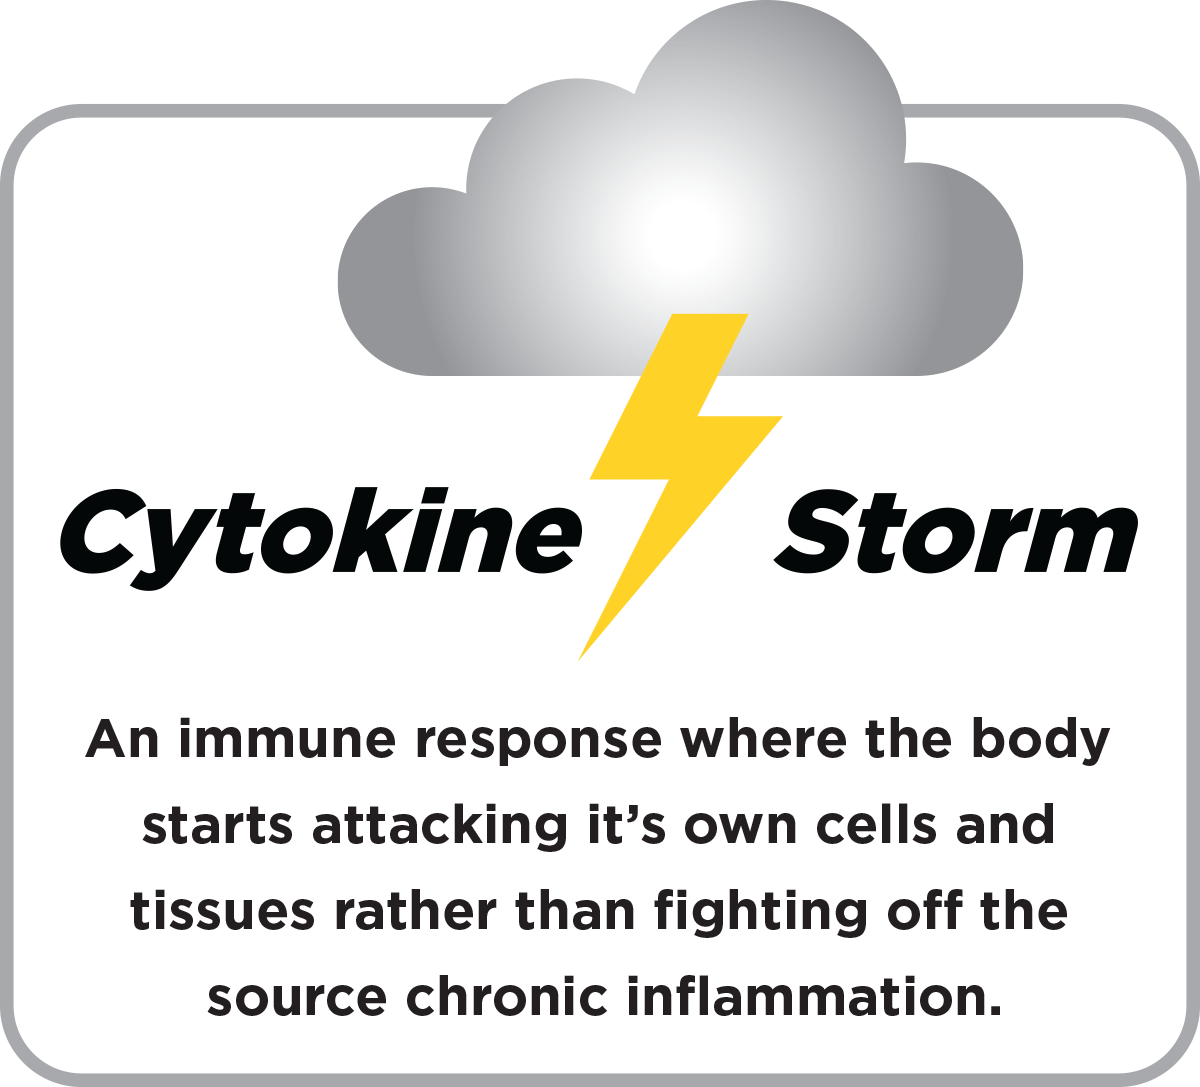 cytokine storms and CBD